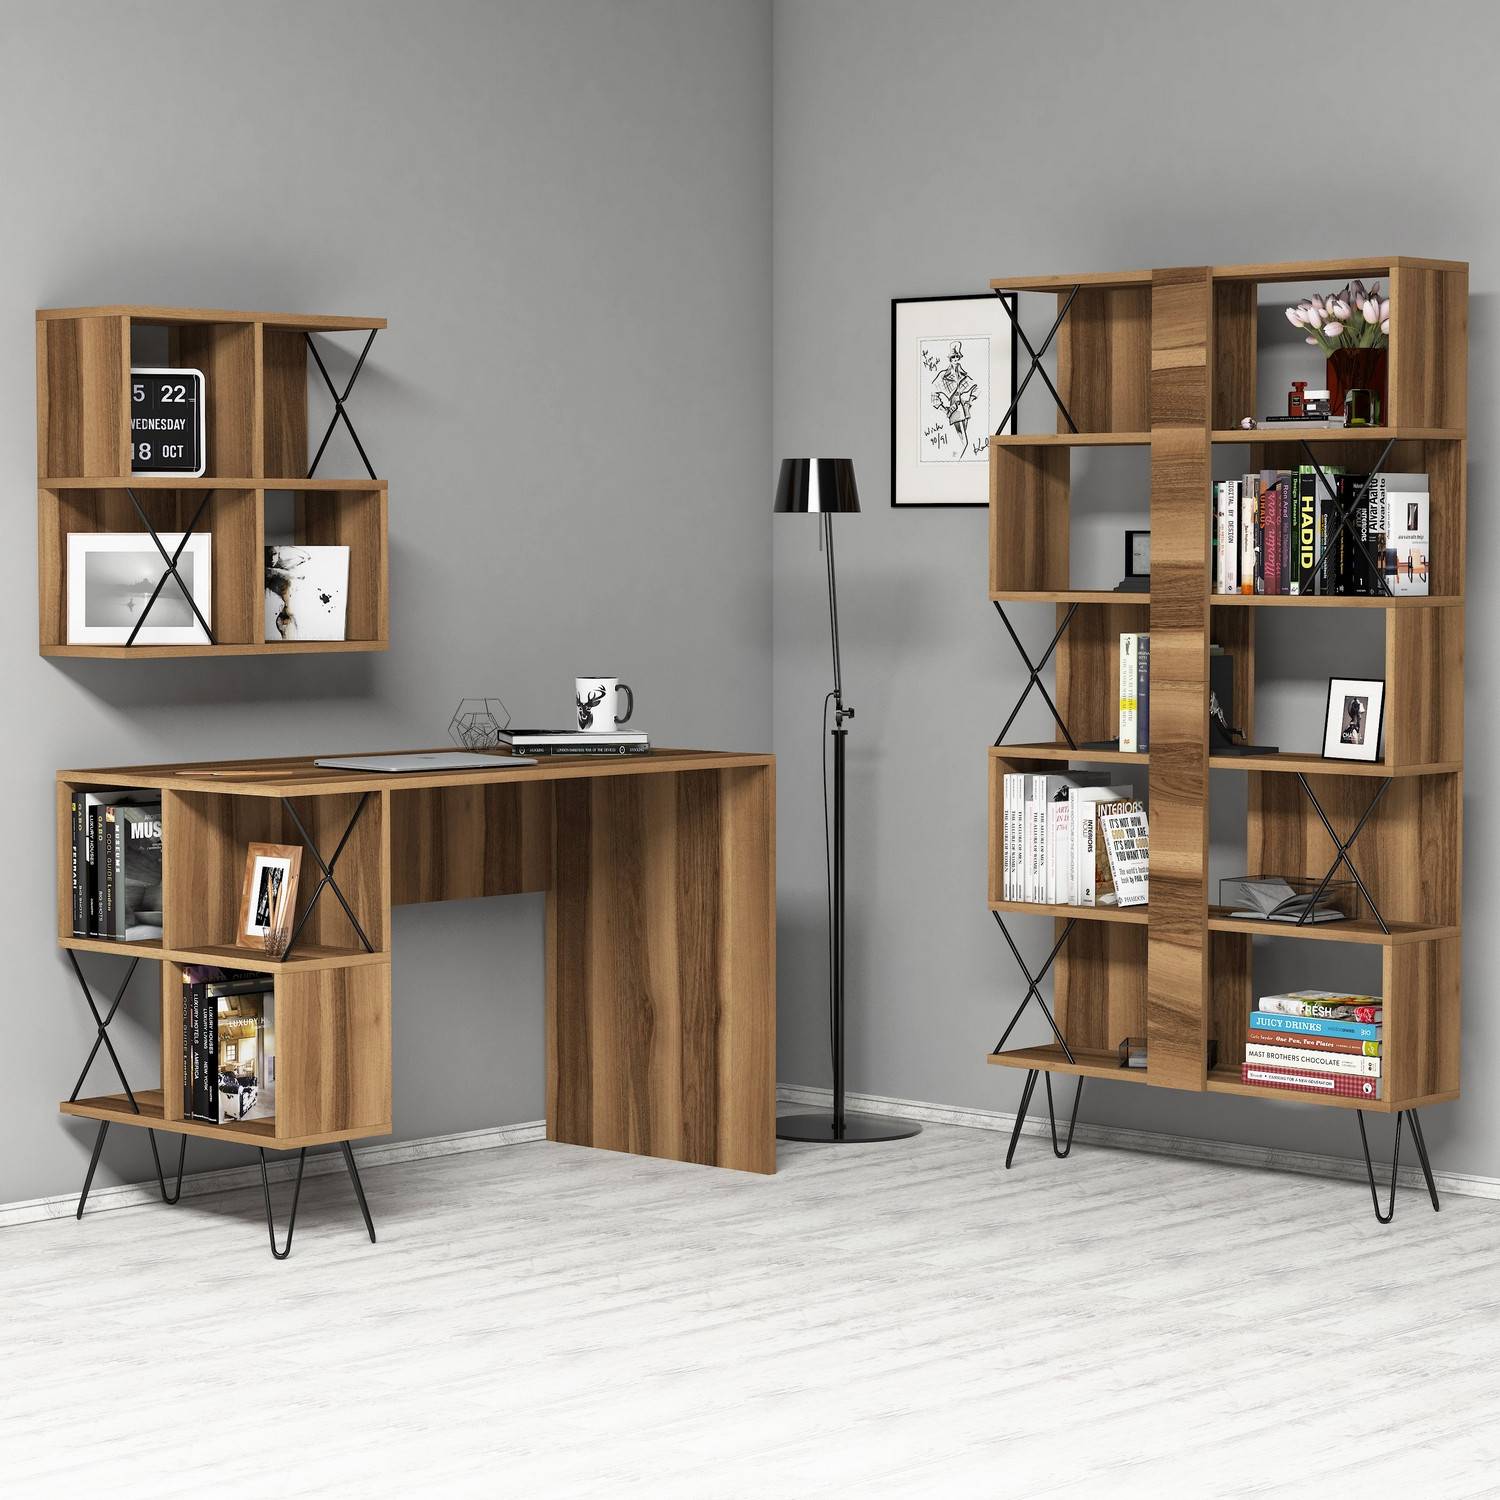 Officima boekenkast en planken set in industriële stijl Donker hout